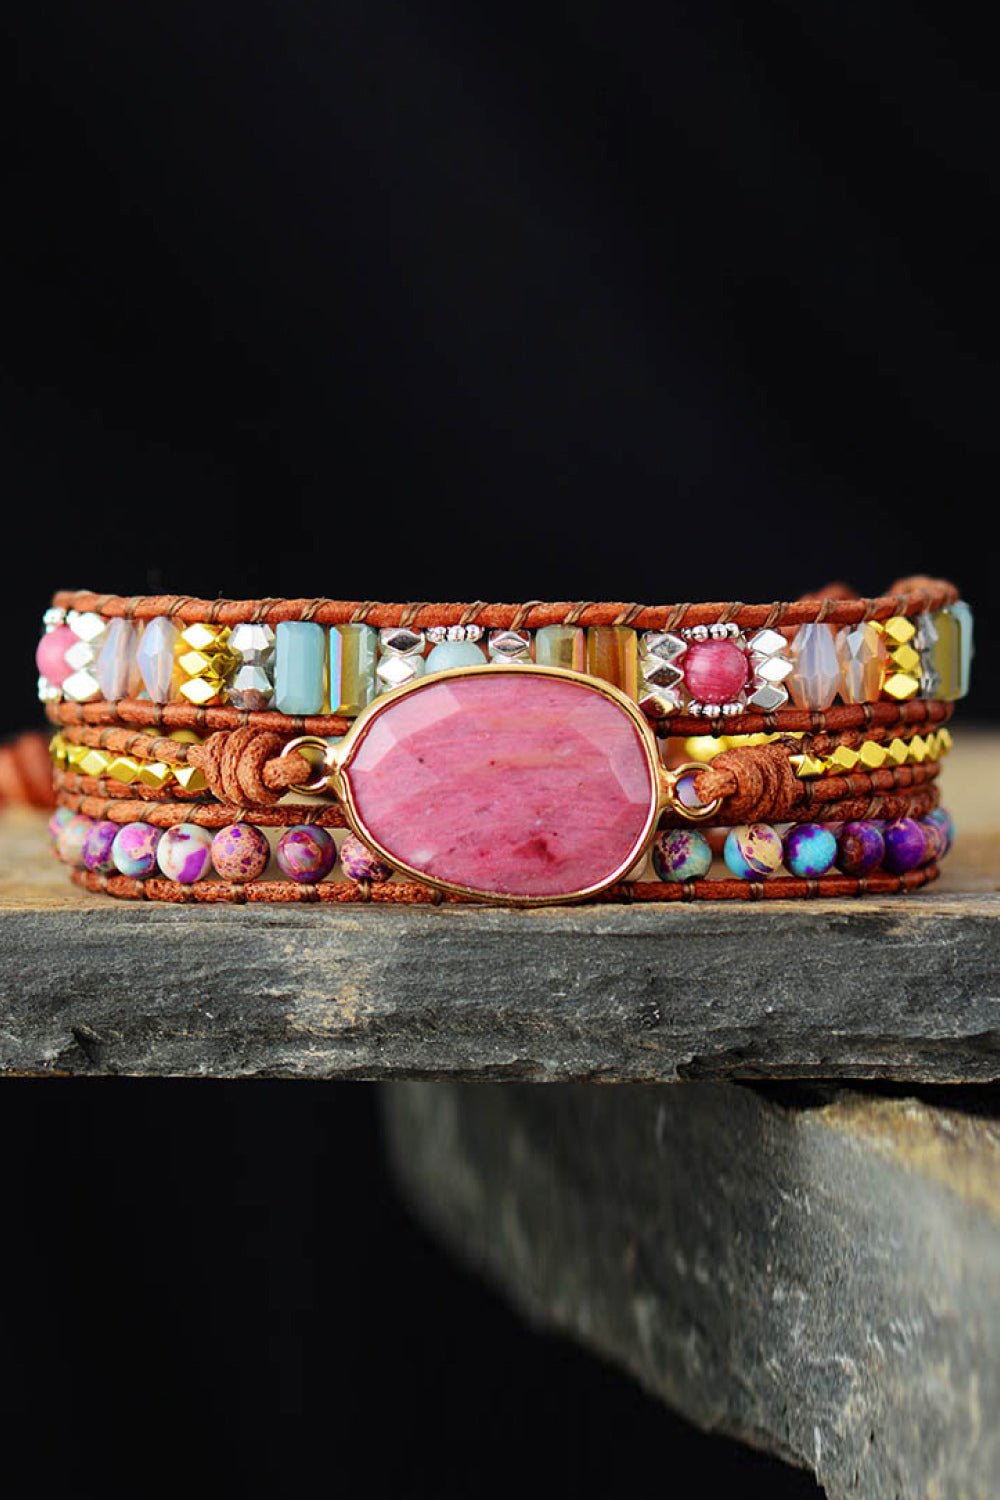 Handmade Crystal Beaded Natural Stone Bracelet - Premium Jewelry - Just $26! Shop now at Nine Thirty Nine Design